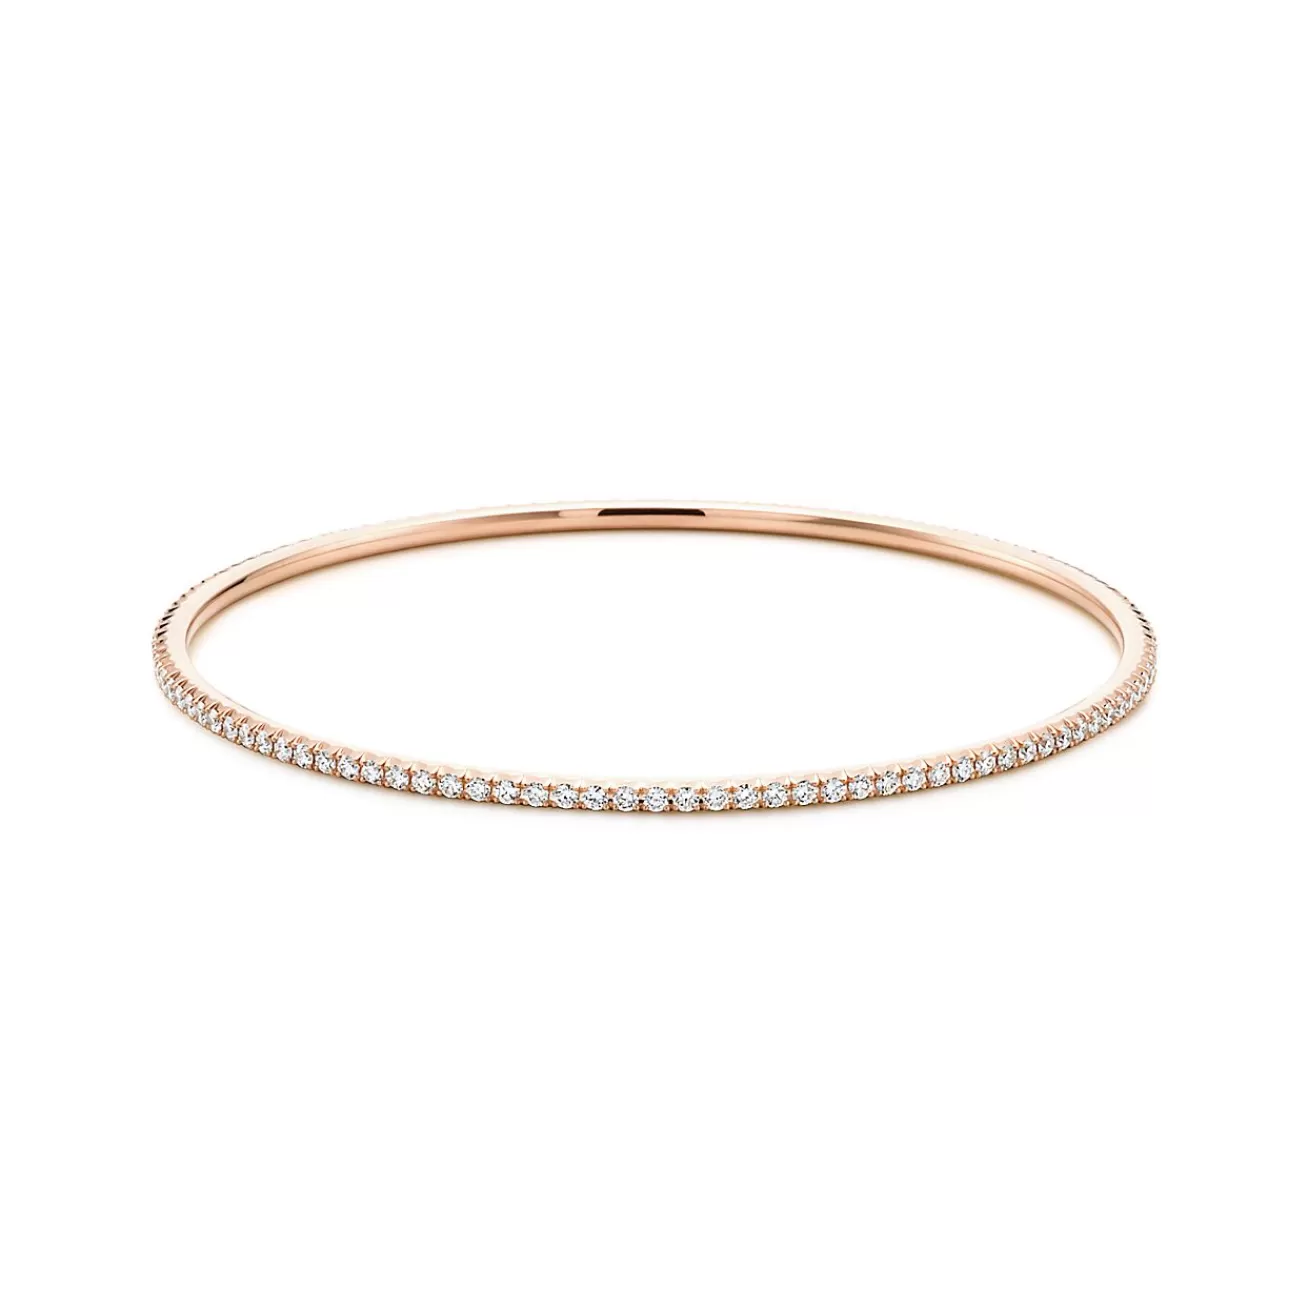 Tiffany & Co. Tiffany Metro bangle in 18k rose gold with diamonds, medium. | ^ Bracelets | Dainty Jewelry